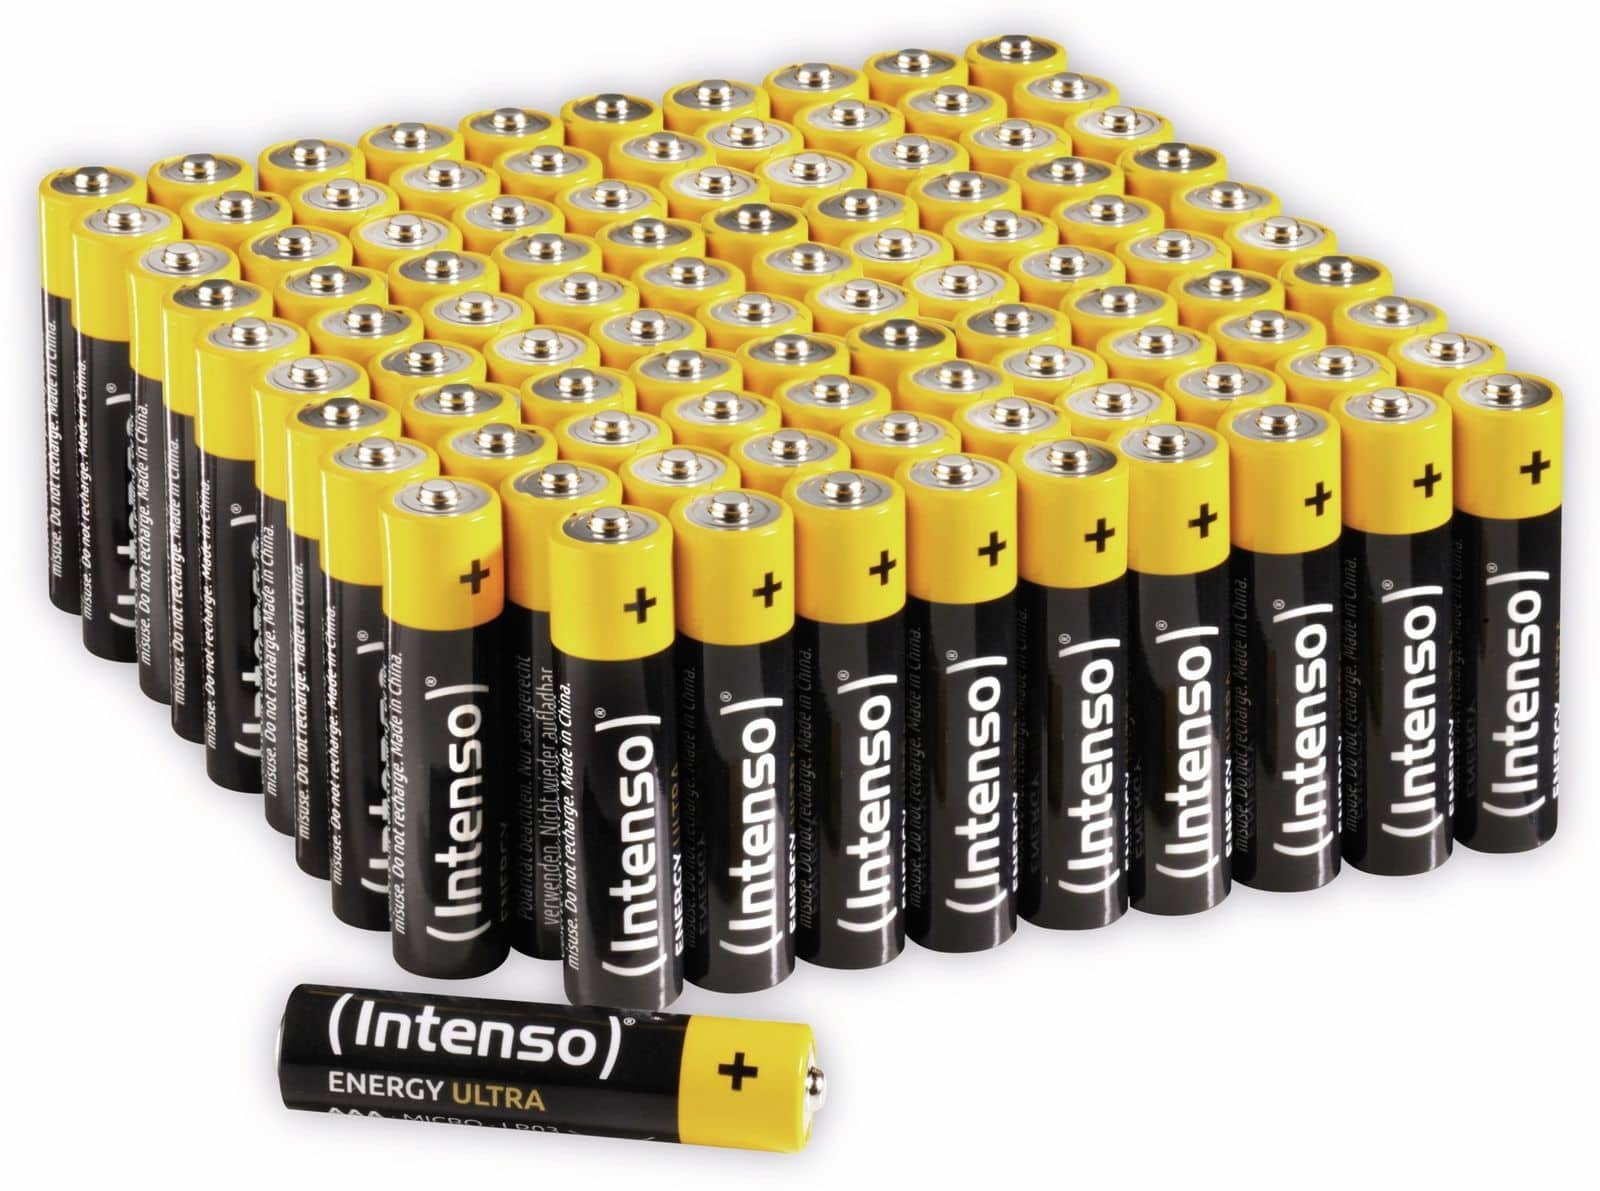 INTENSO Micro-Batterie Energy Ultra, AAA LR03, 100 Stück von Intenso